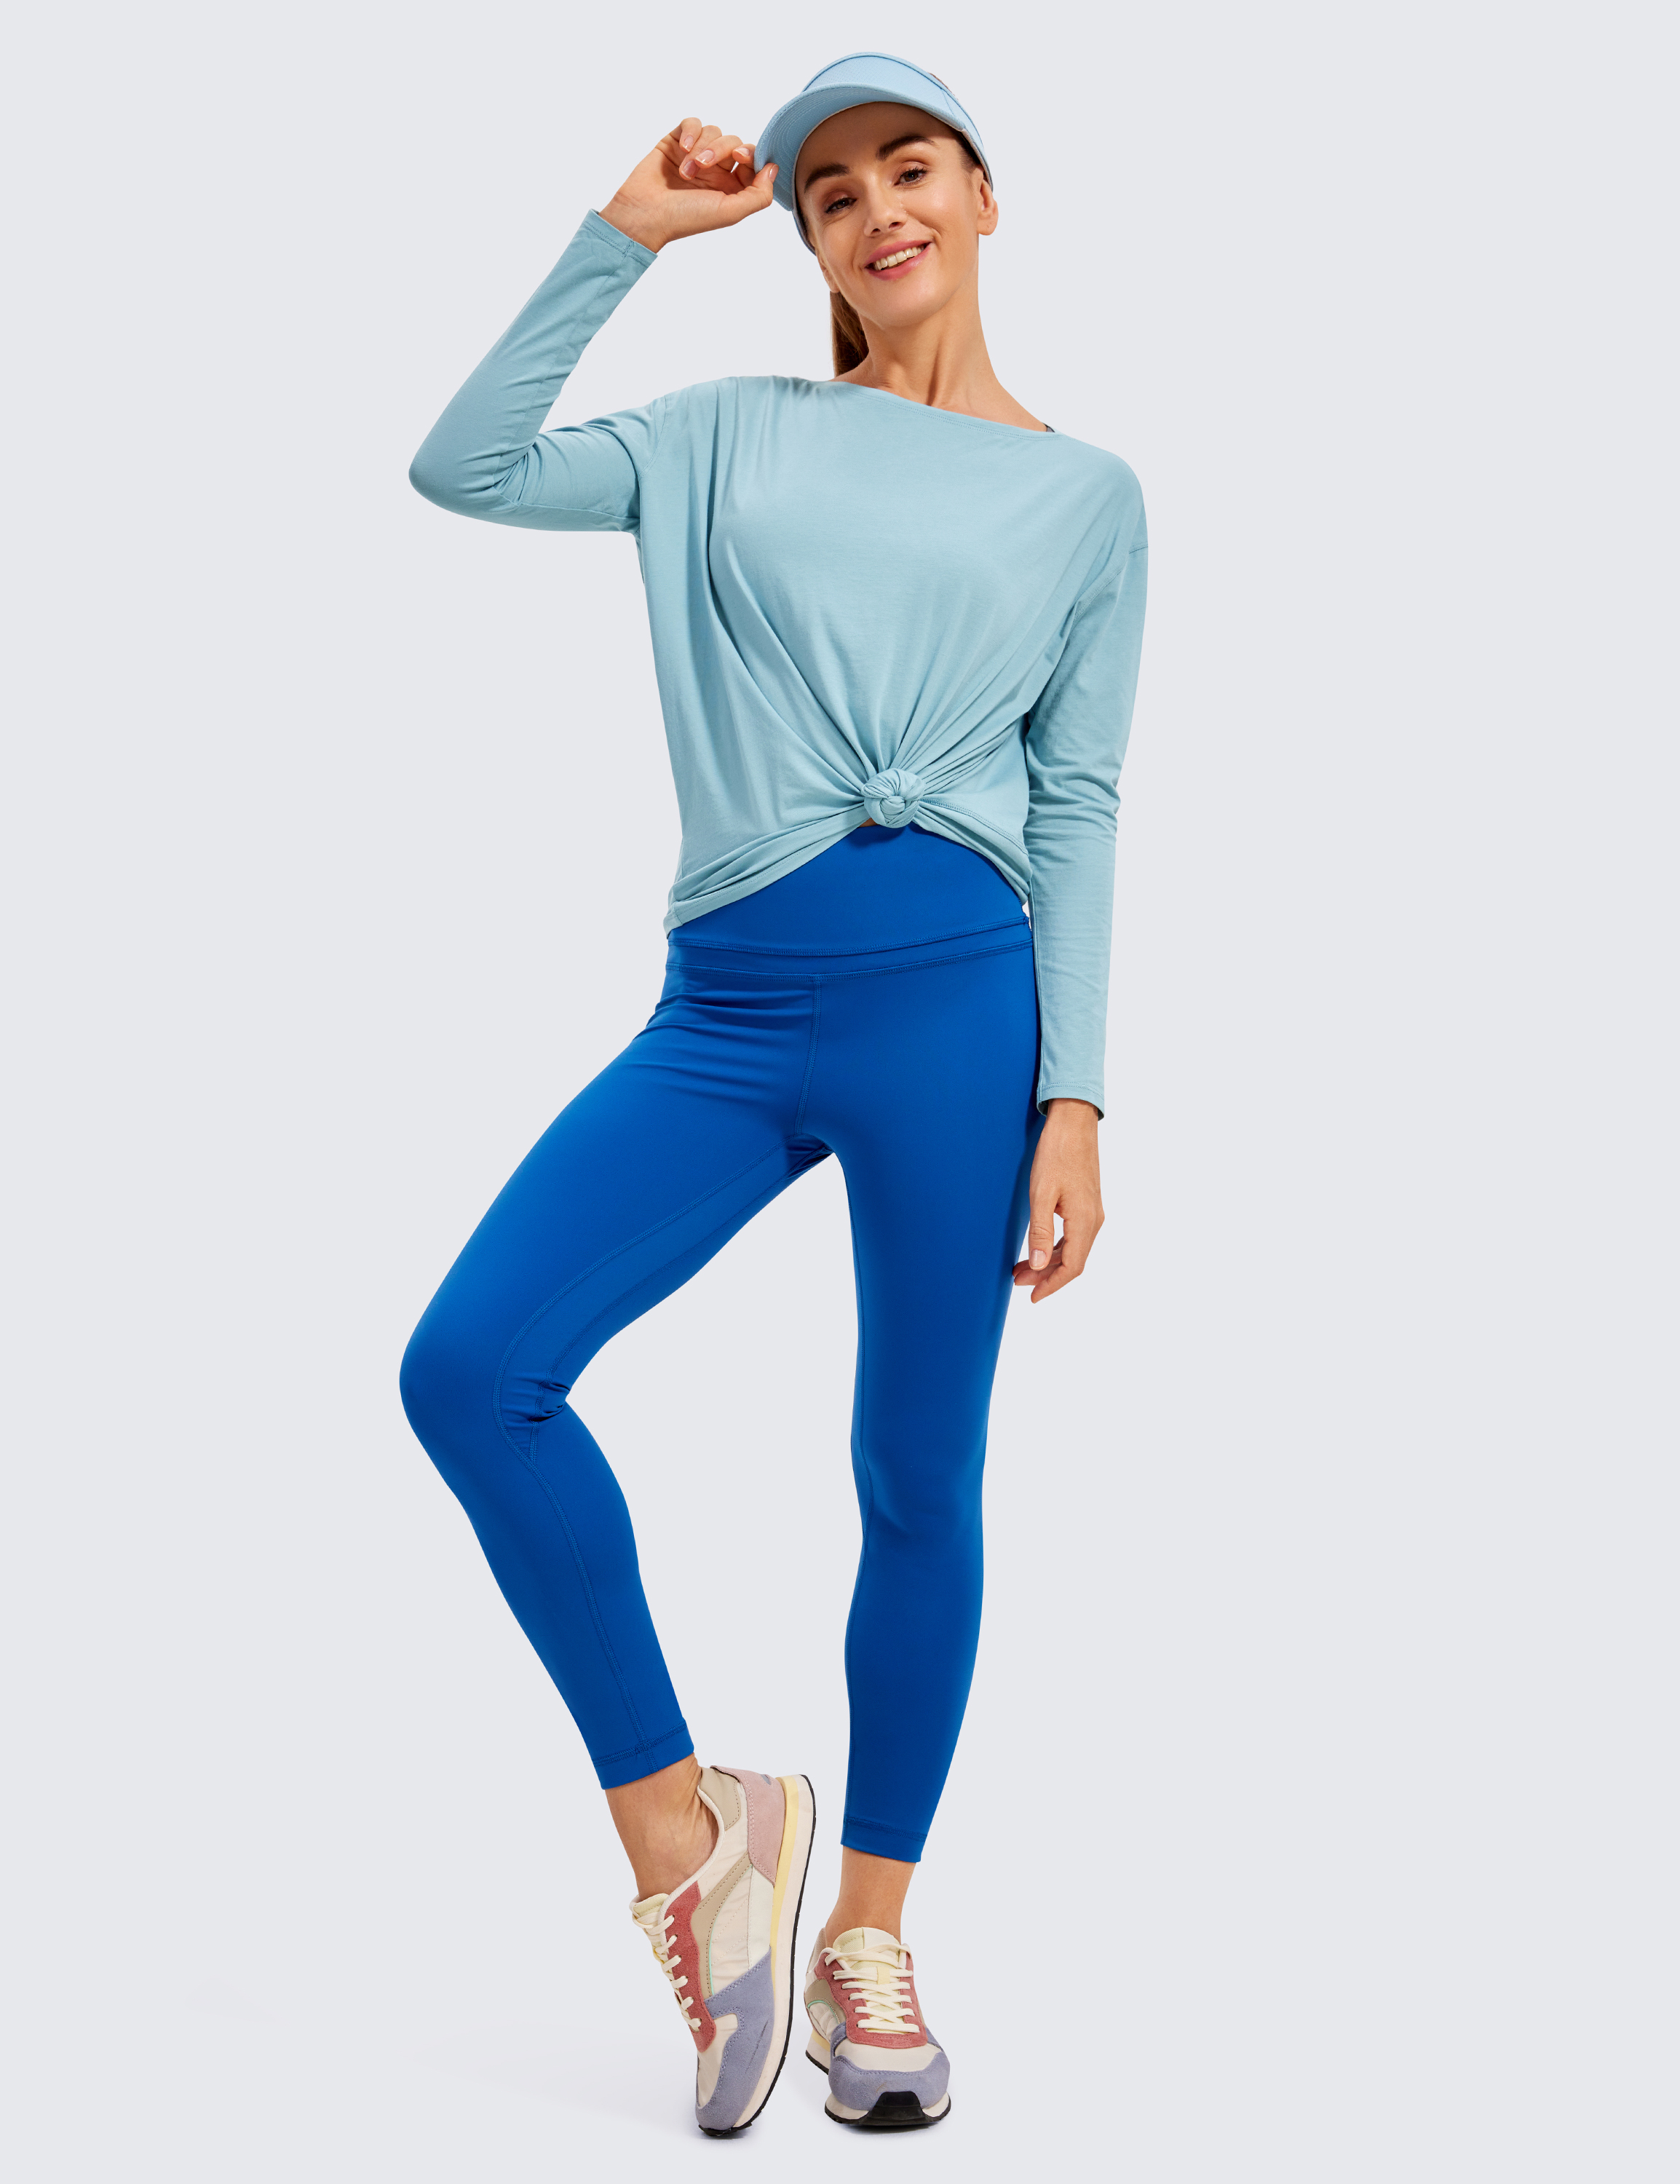 CRZ YOGA Pima Cotton Women's Workout Cropped Tops Short Sleeve Yoga Shirts